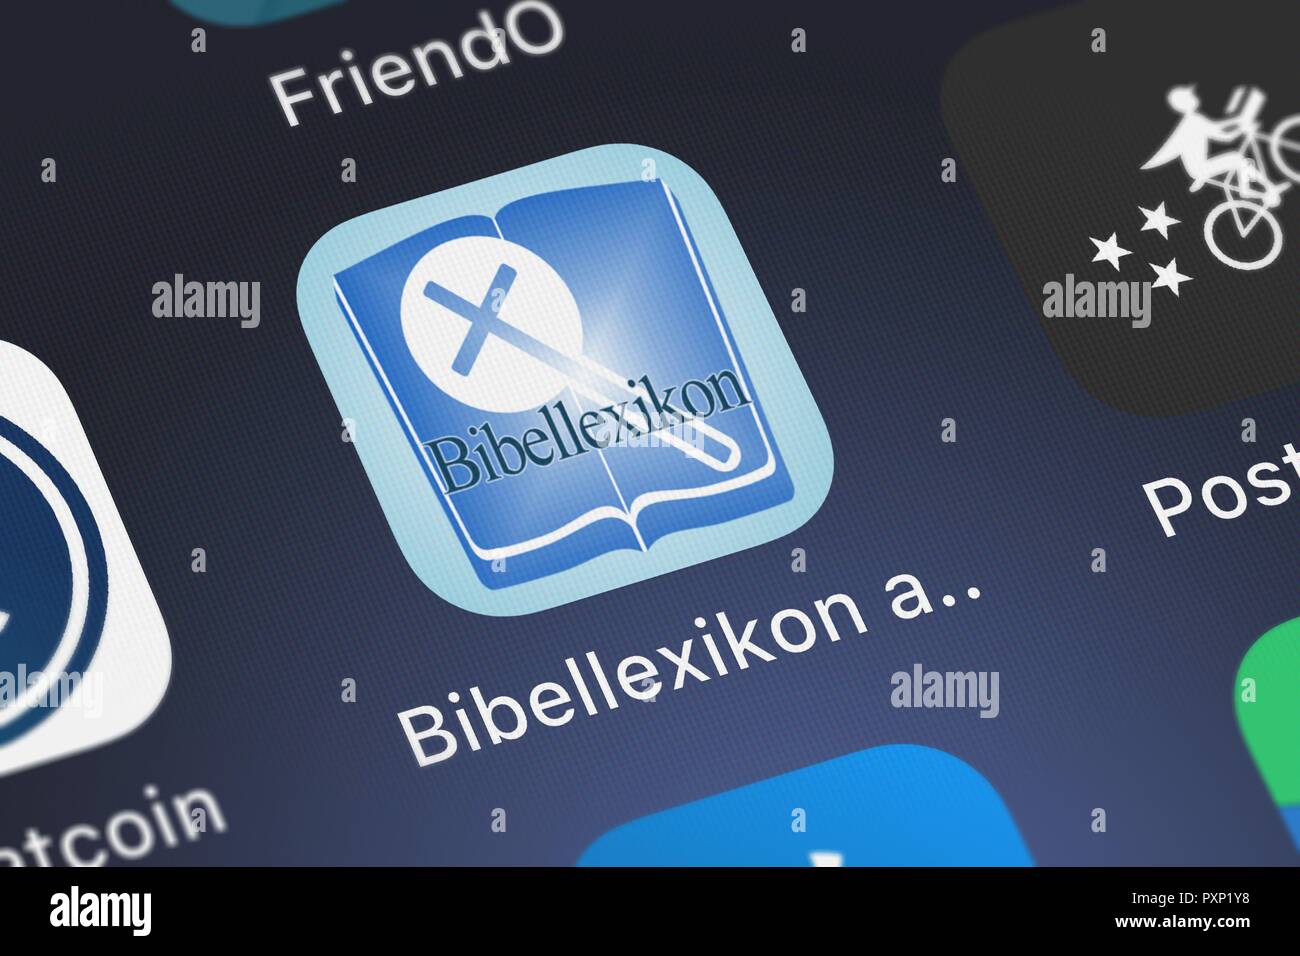 London, United Kingdom - October 23, 2018: Close-up shot of the Bibellexikon auf Deutsch mobile app from Oleg Shukalovich. Stock Photo